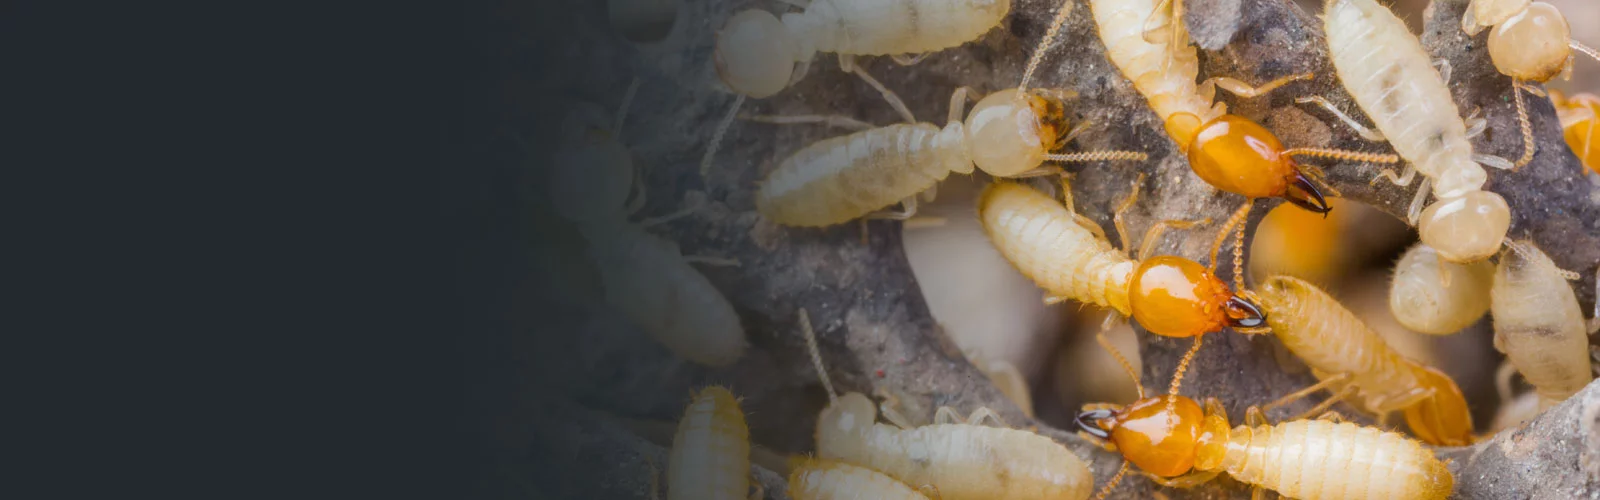 termite species in chile a comprehensive guide